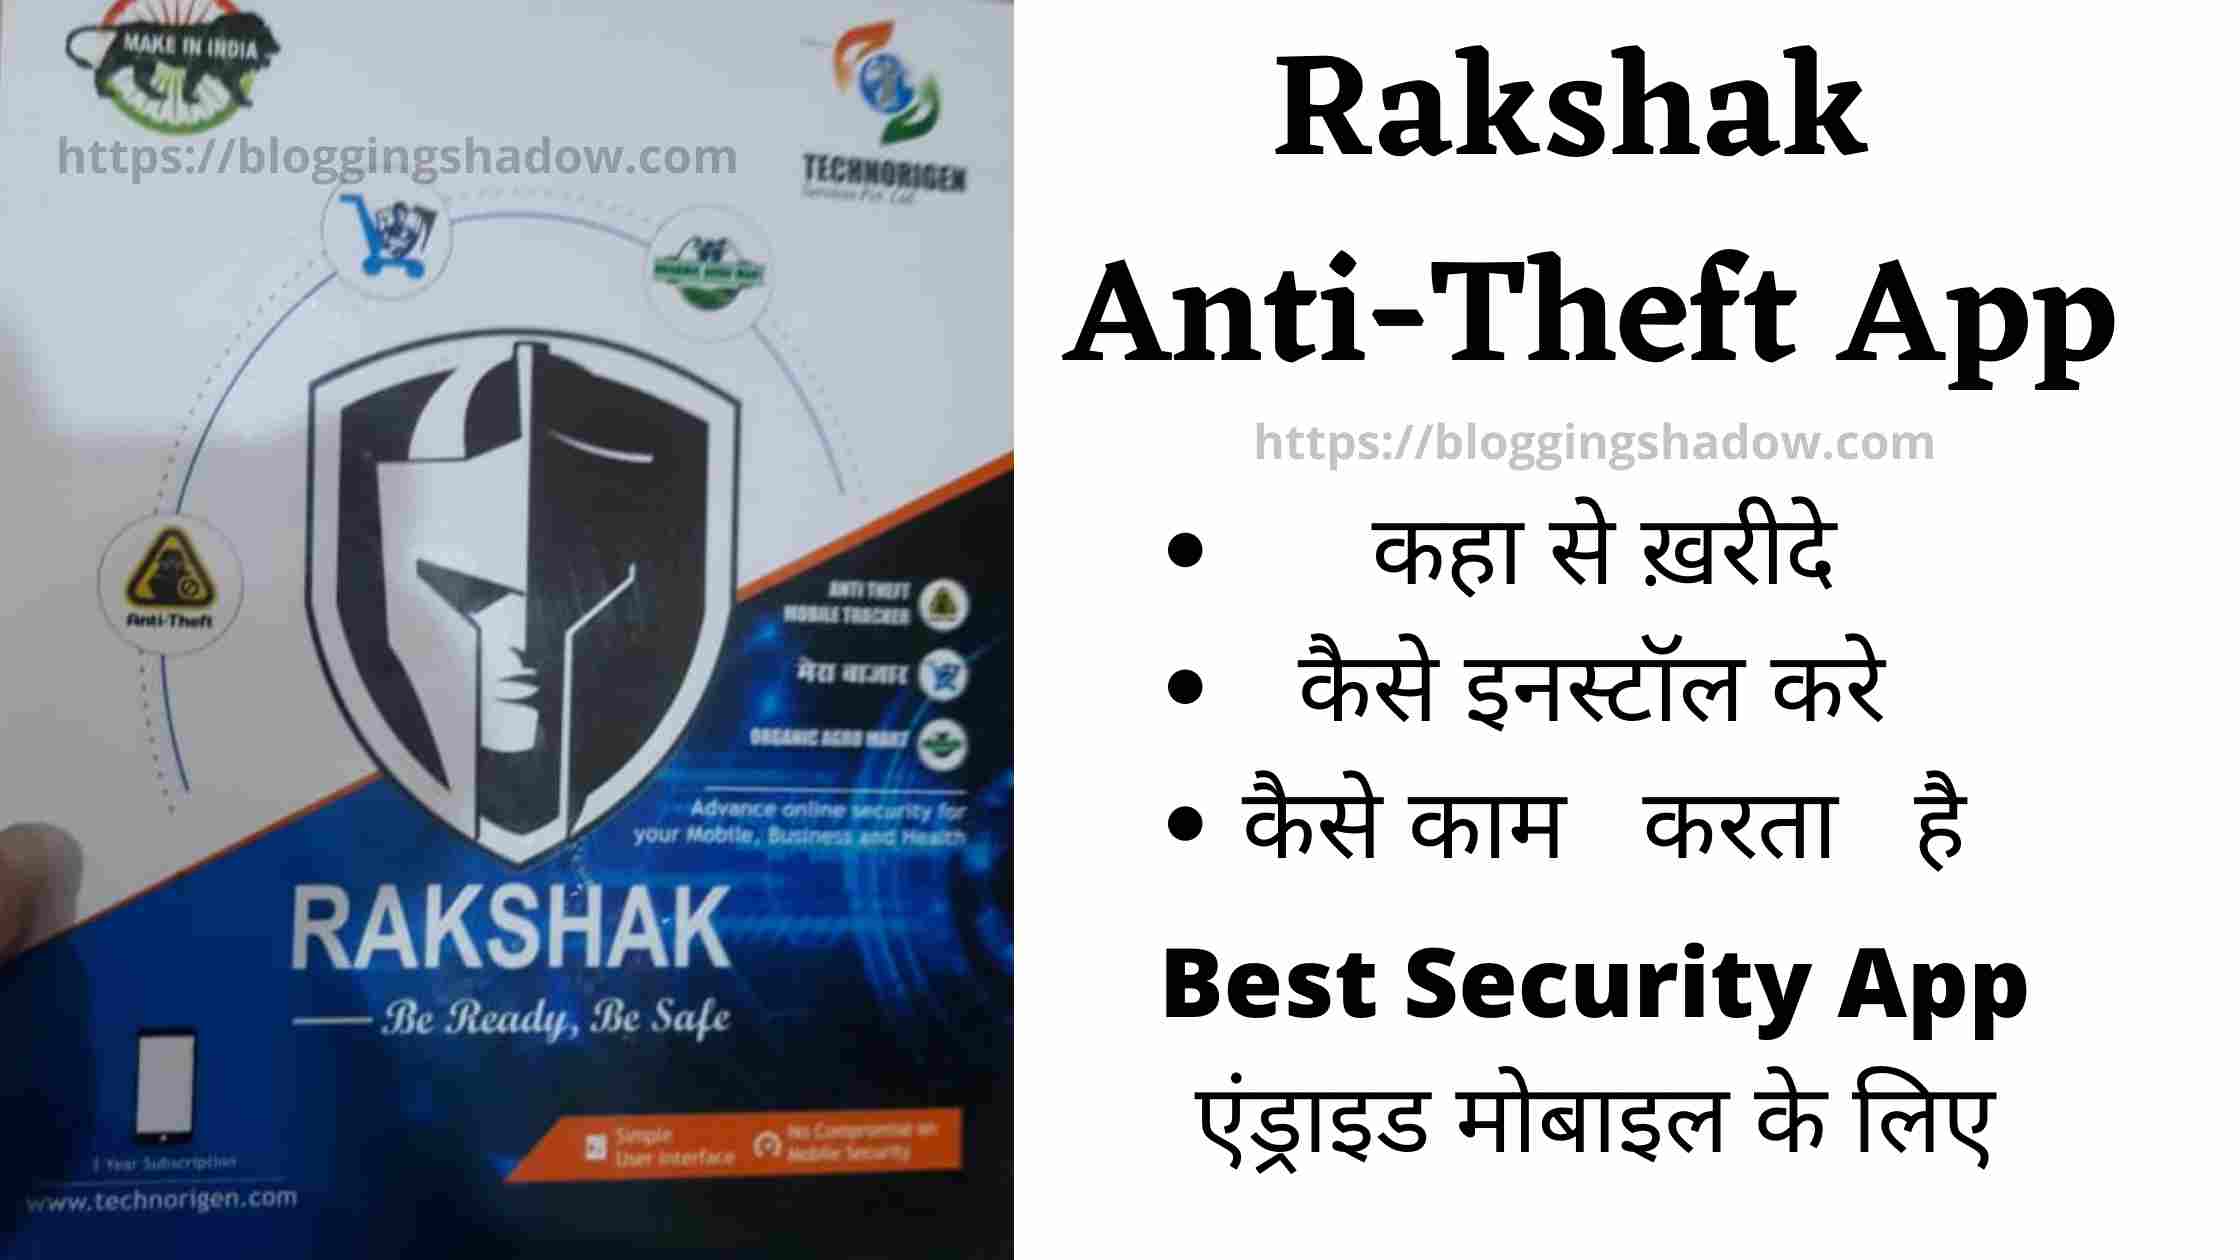 rakshak app information in hindi